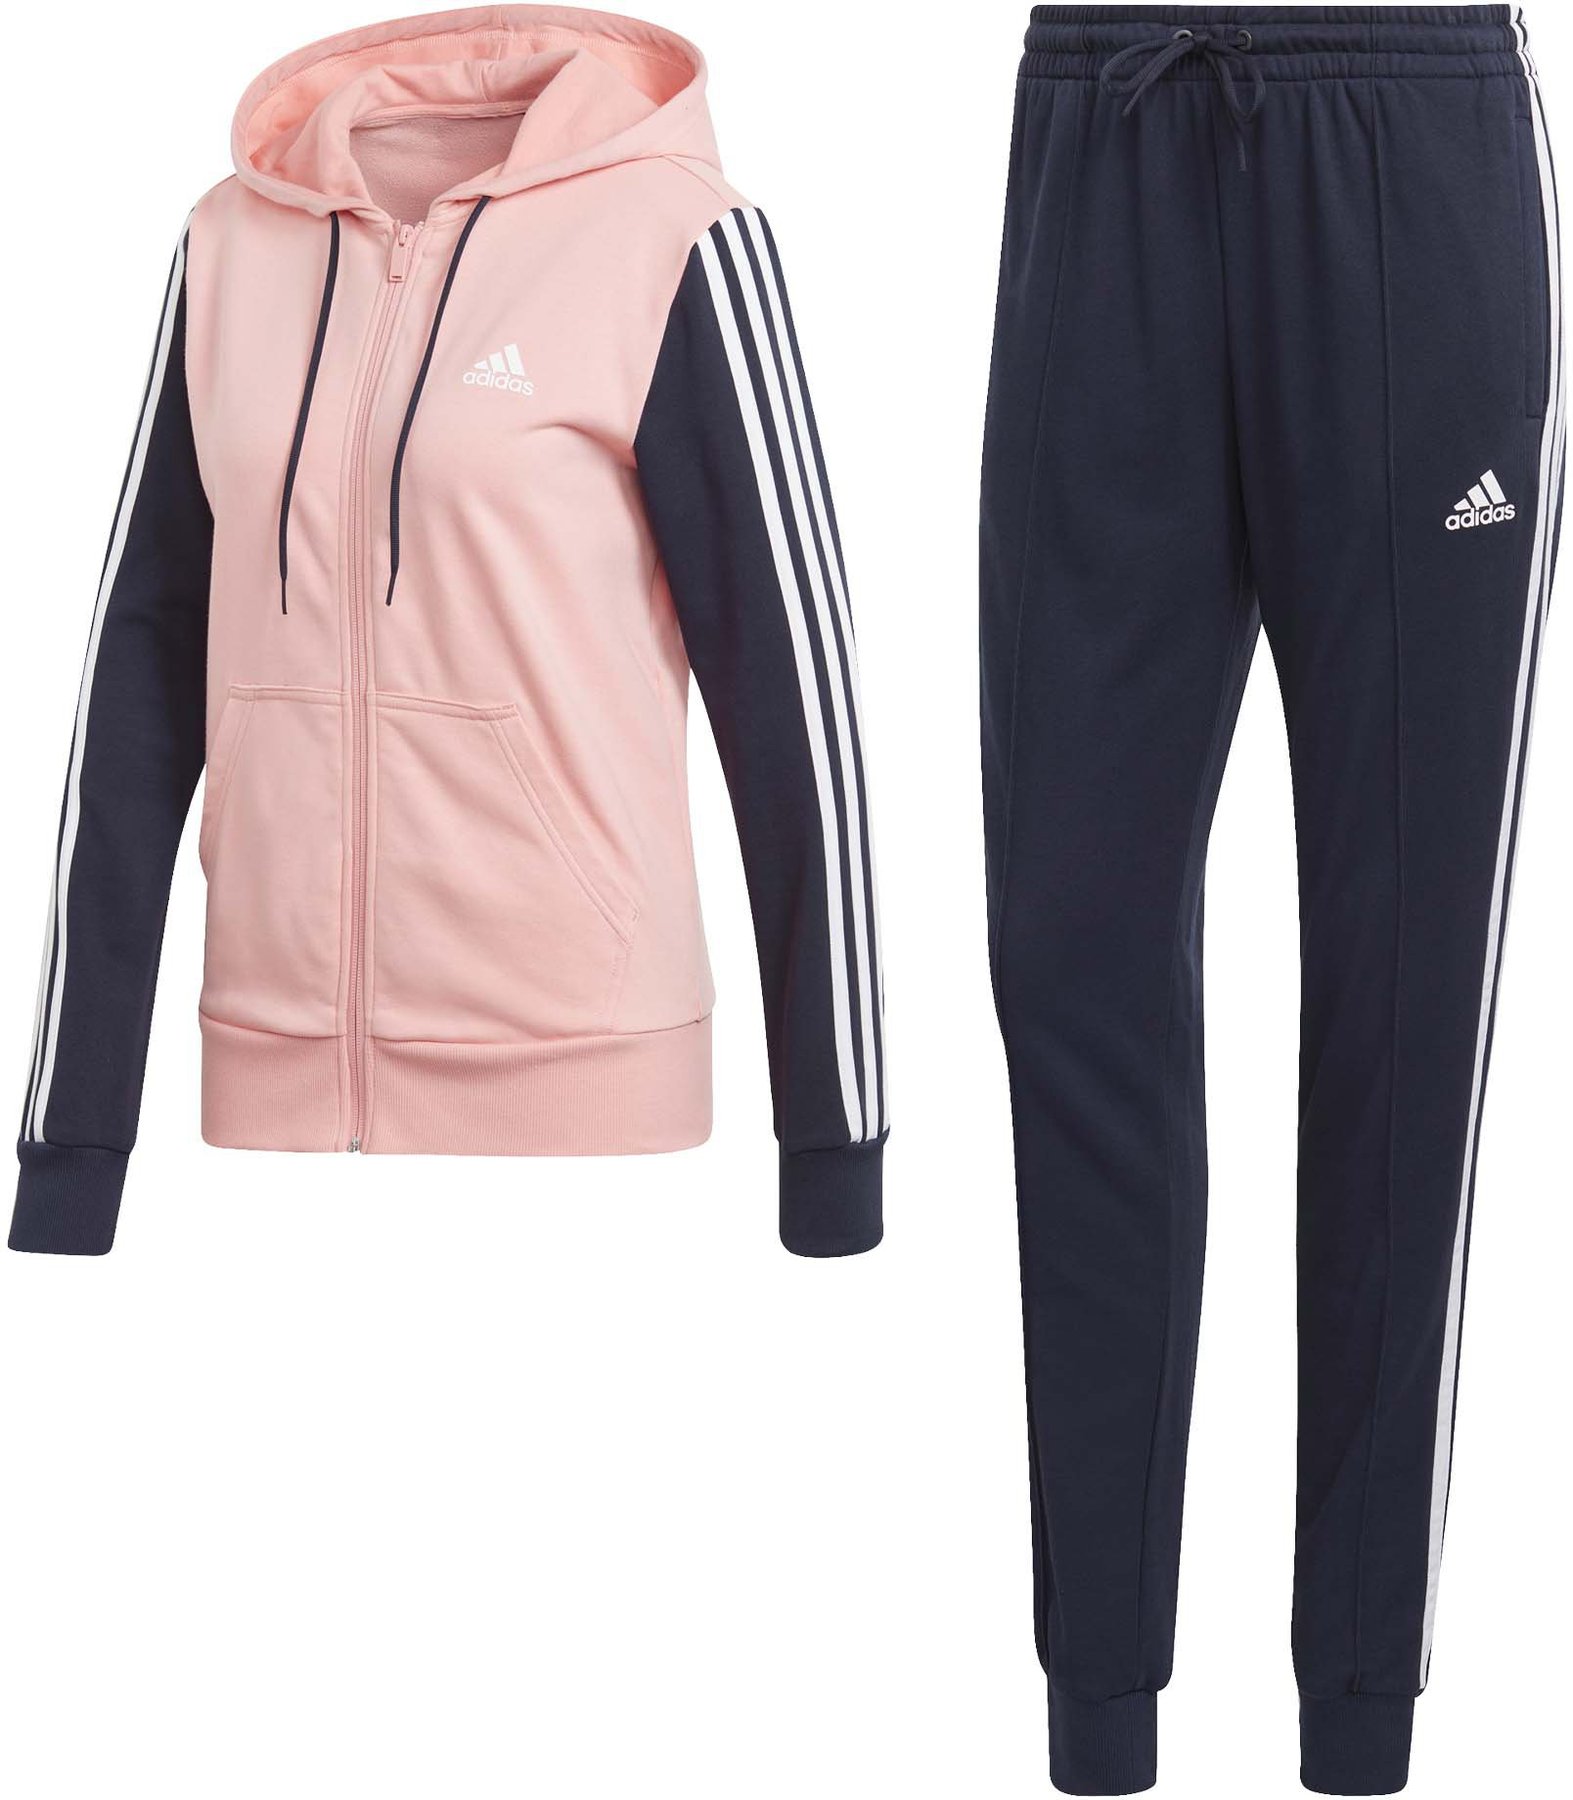 Adidas Energiz Trainingsanzug Frauen glory pink/legend ink günstig